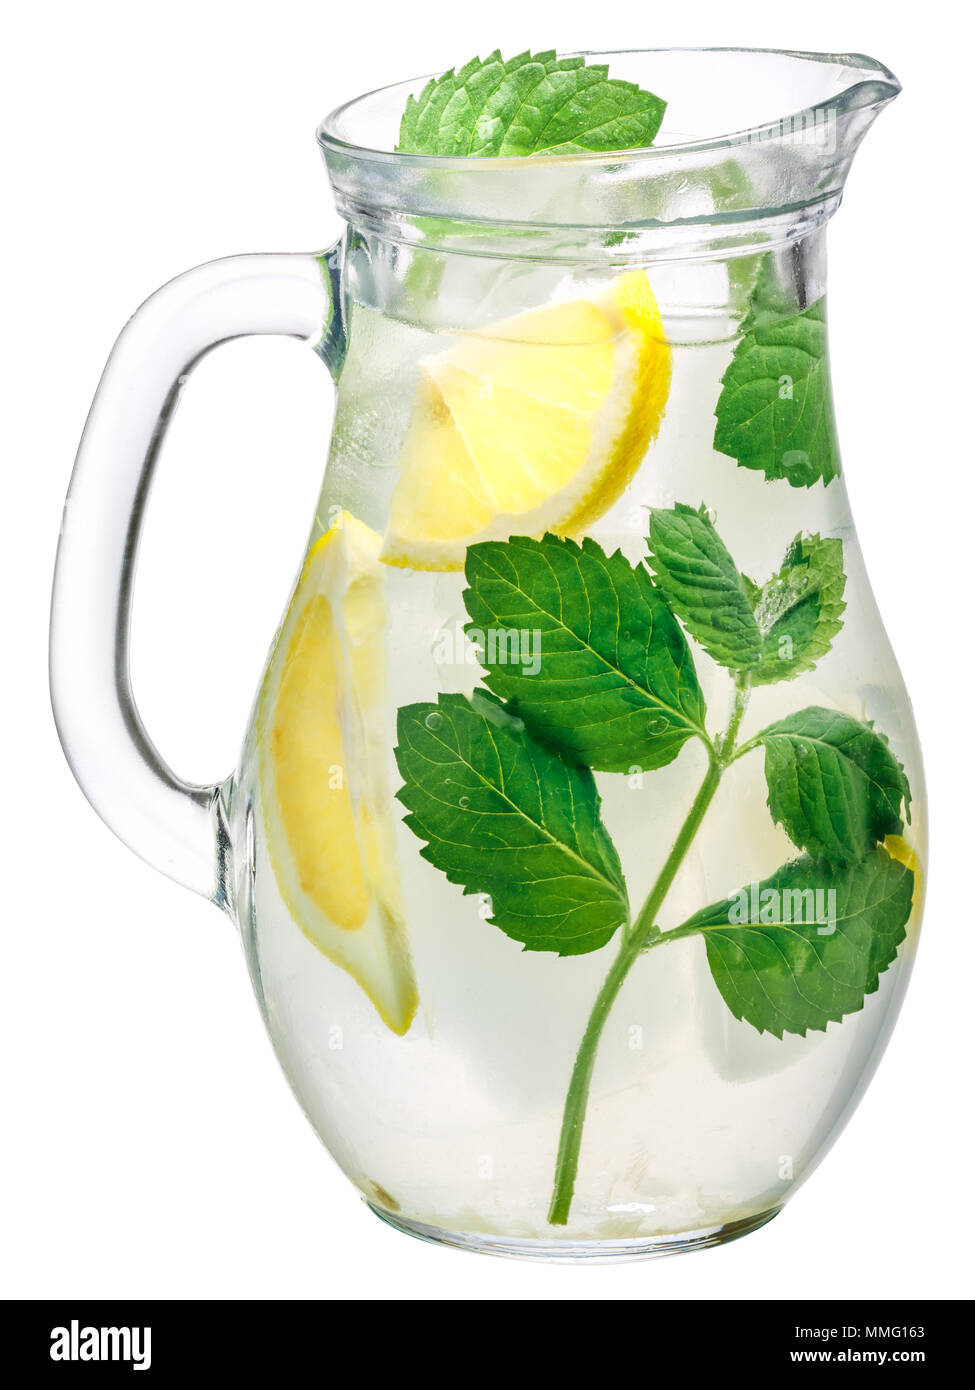 Jug of wint with lemon detox water or lemonade Stock Photo